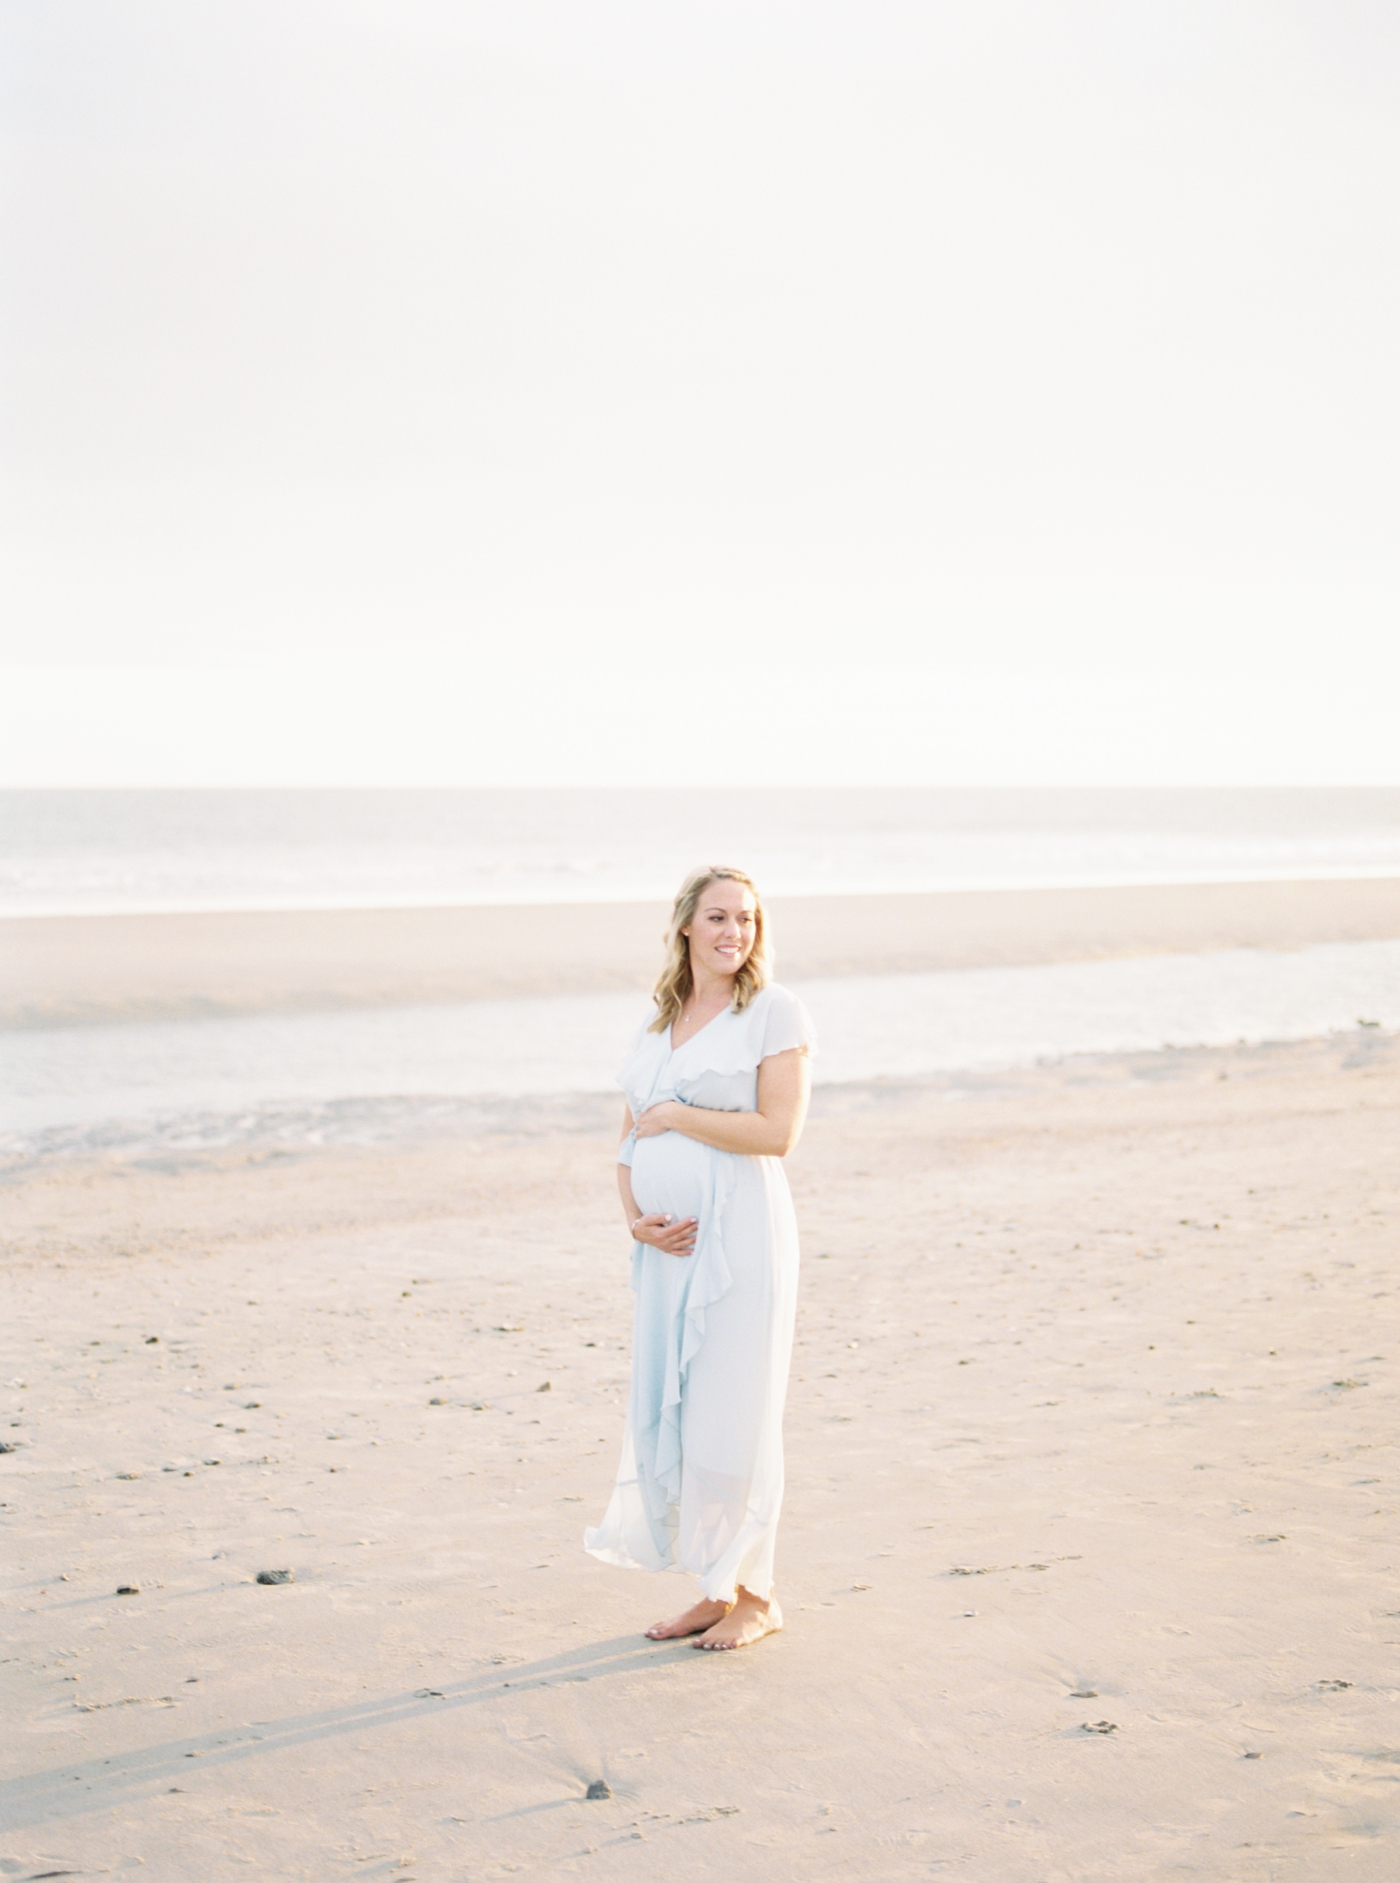 Maternity photo on film at the beach. Photo by Caitlyn Motycka Photography.